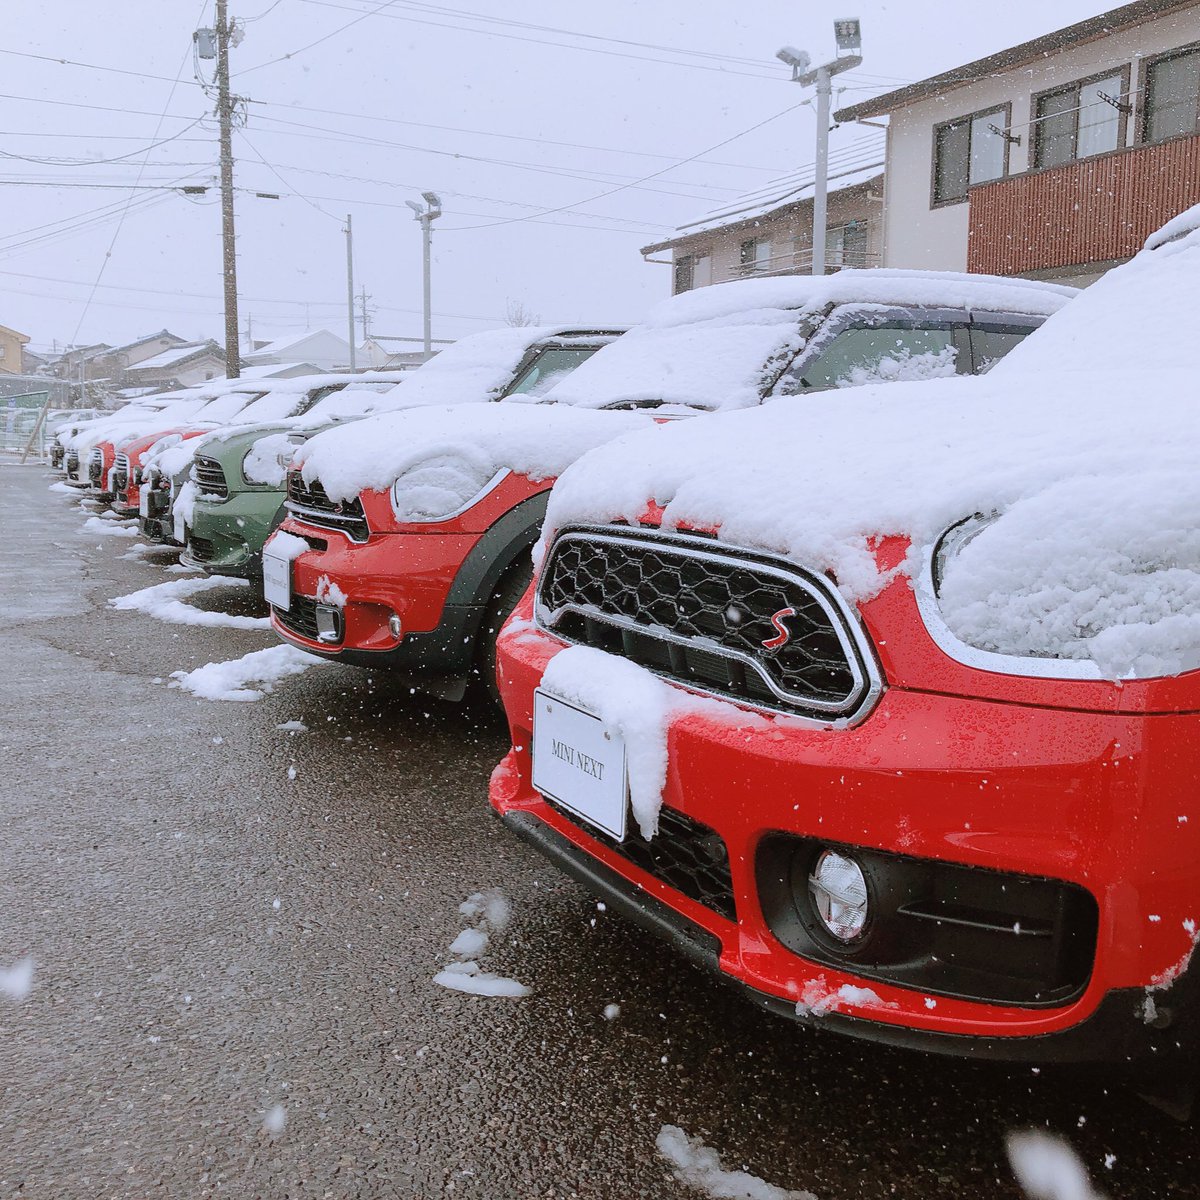 Mini Next 松本 中古車 松本 ミニクーパー 雪 寒い W Mini Minicooper ミニ ミニクーパー 松本市 車 車好きと繋がりたい 雪 長野県 松本市